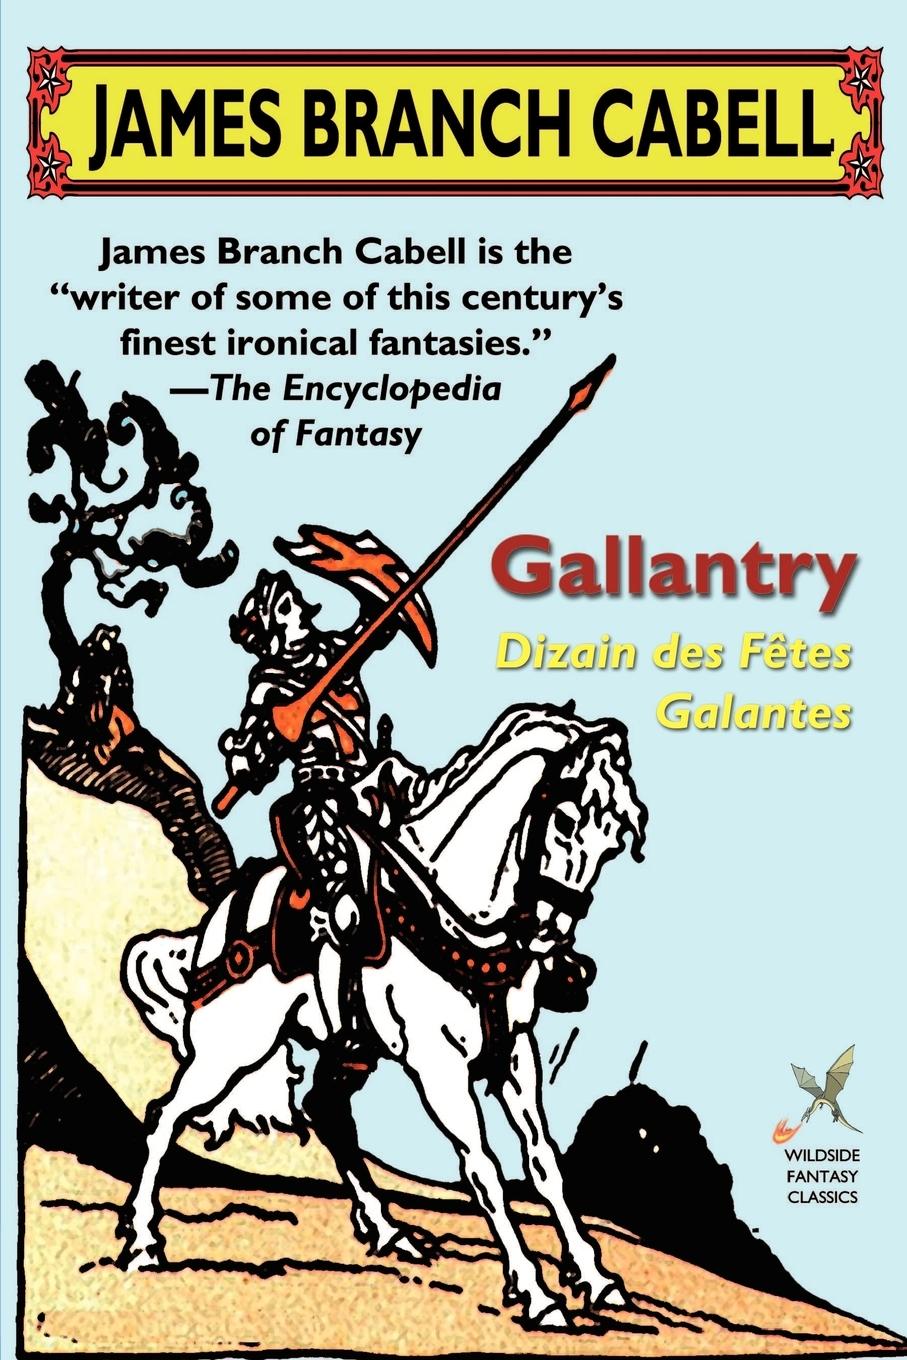 Gallantry - Cabell, James Branch